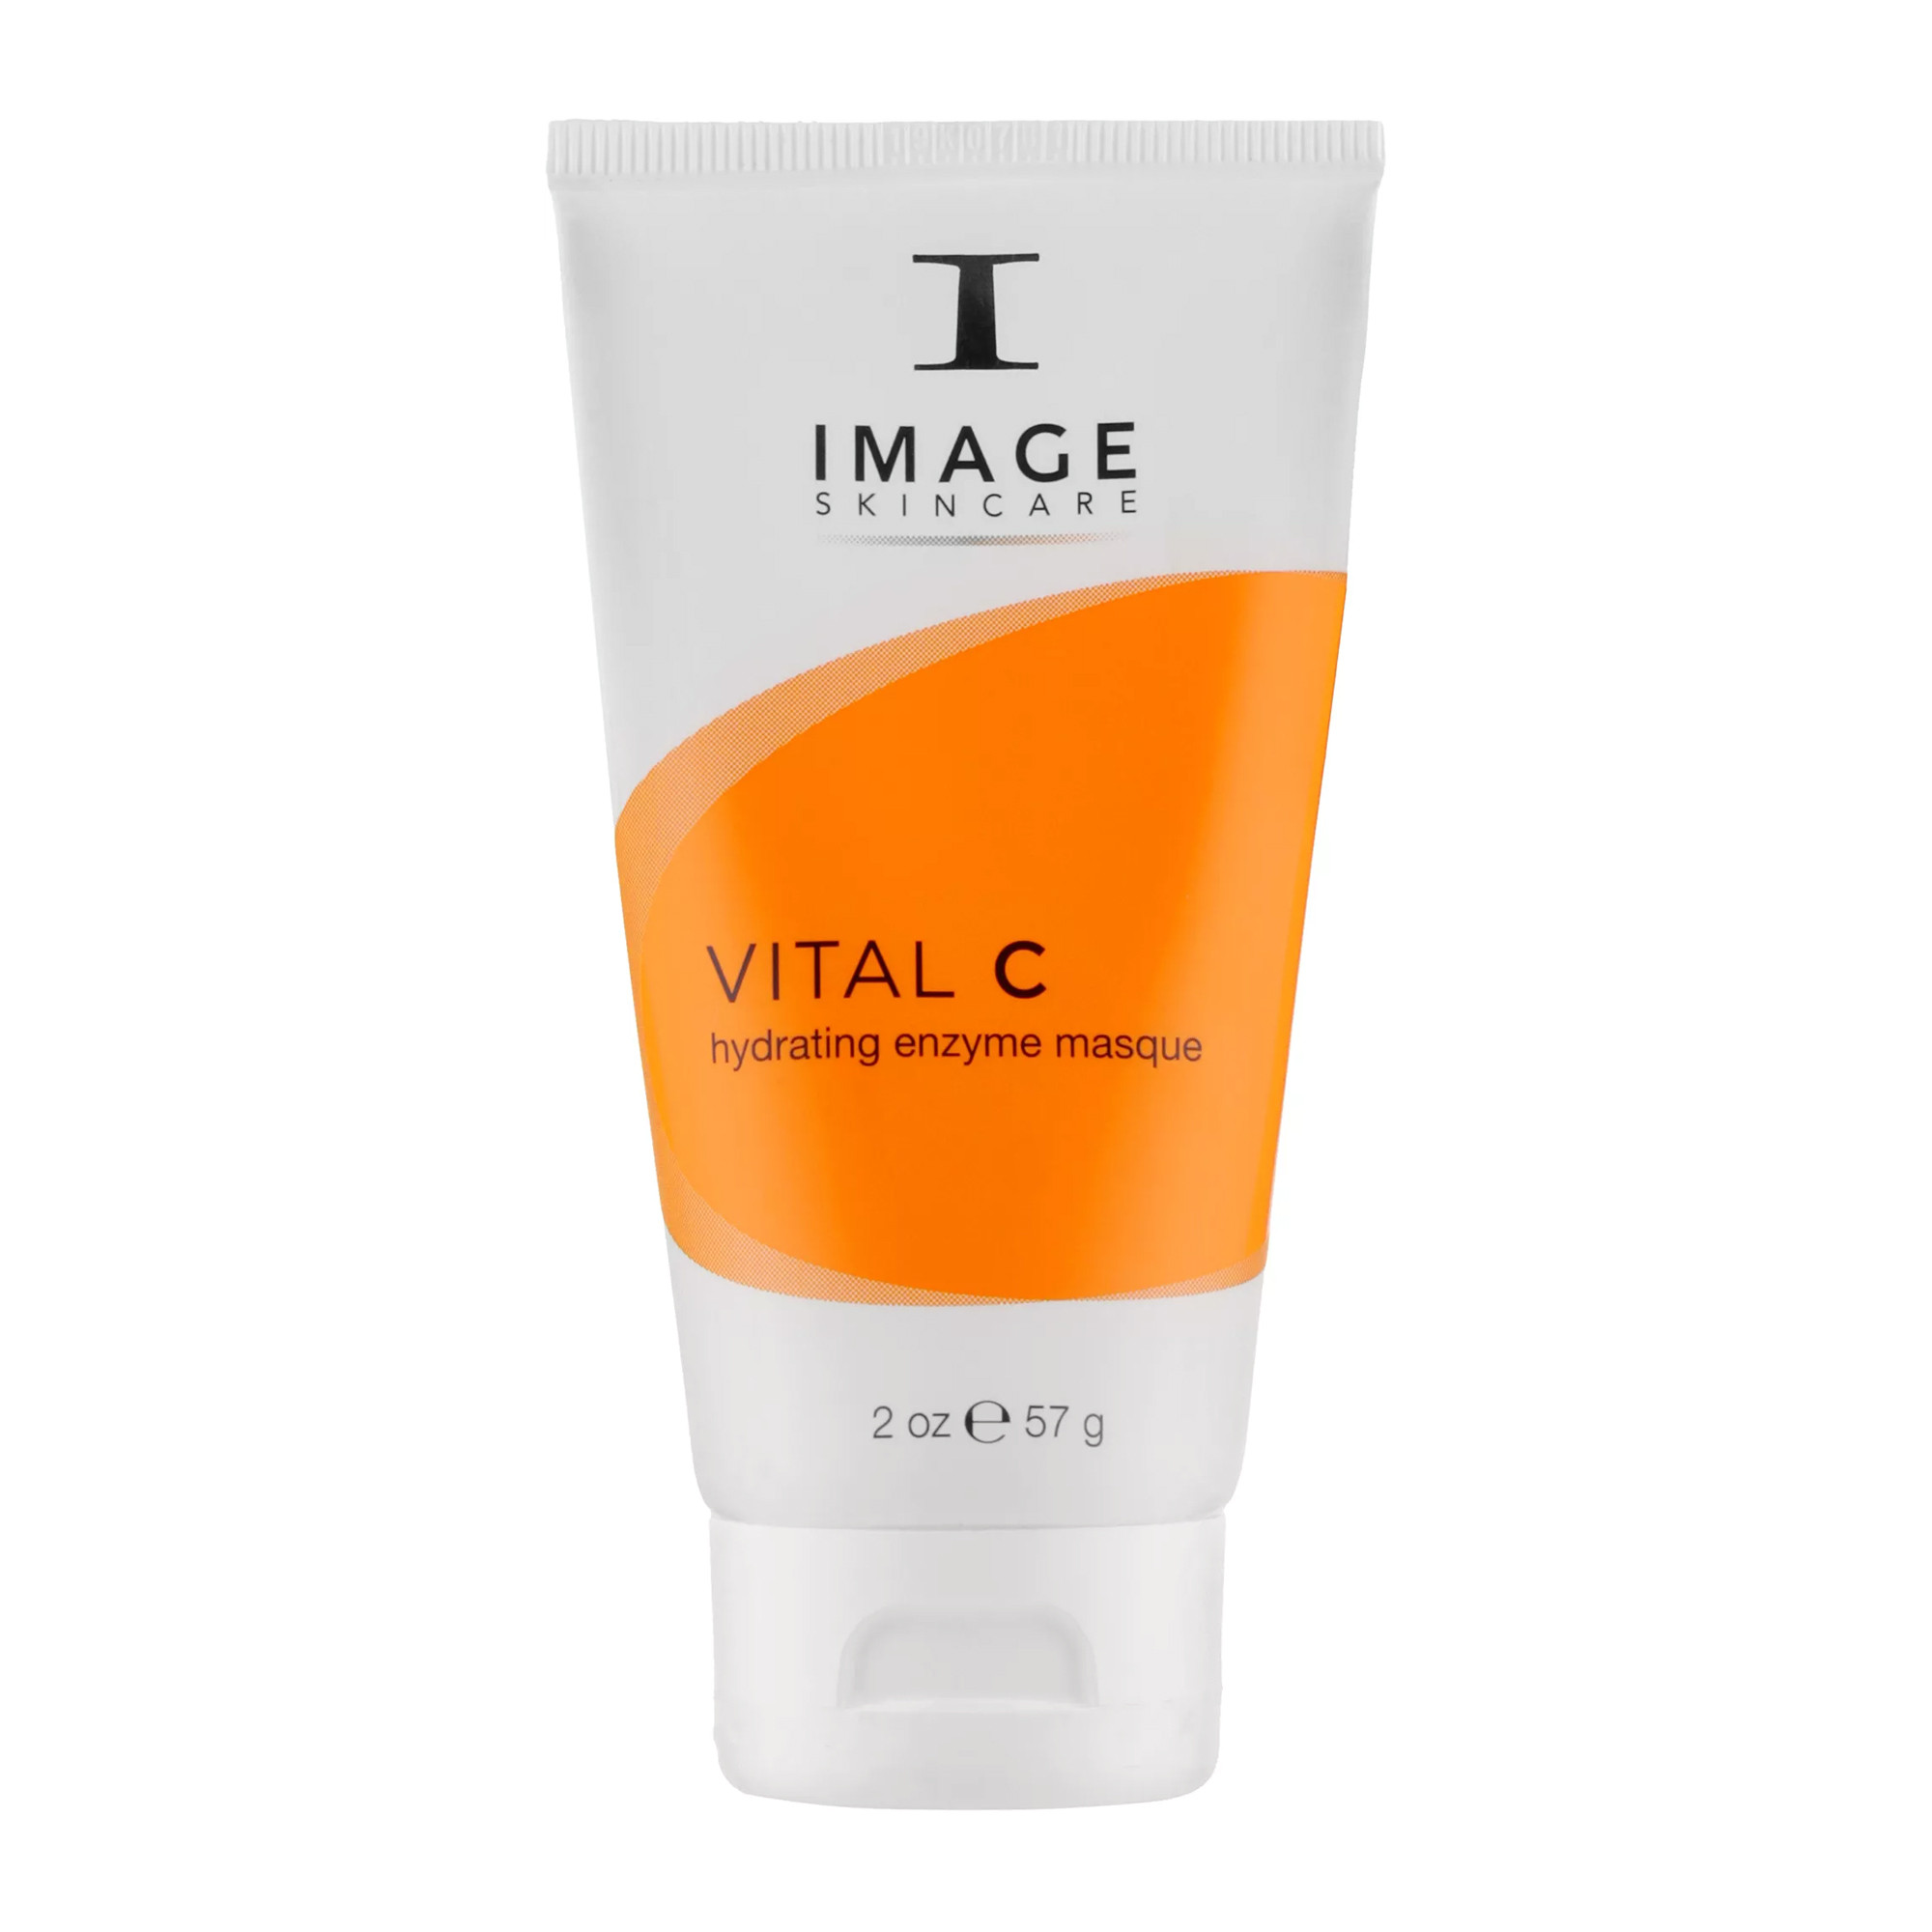 image skincare hydrating enzyme masque